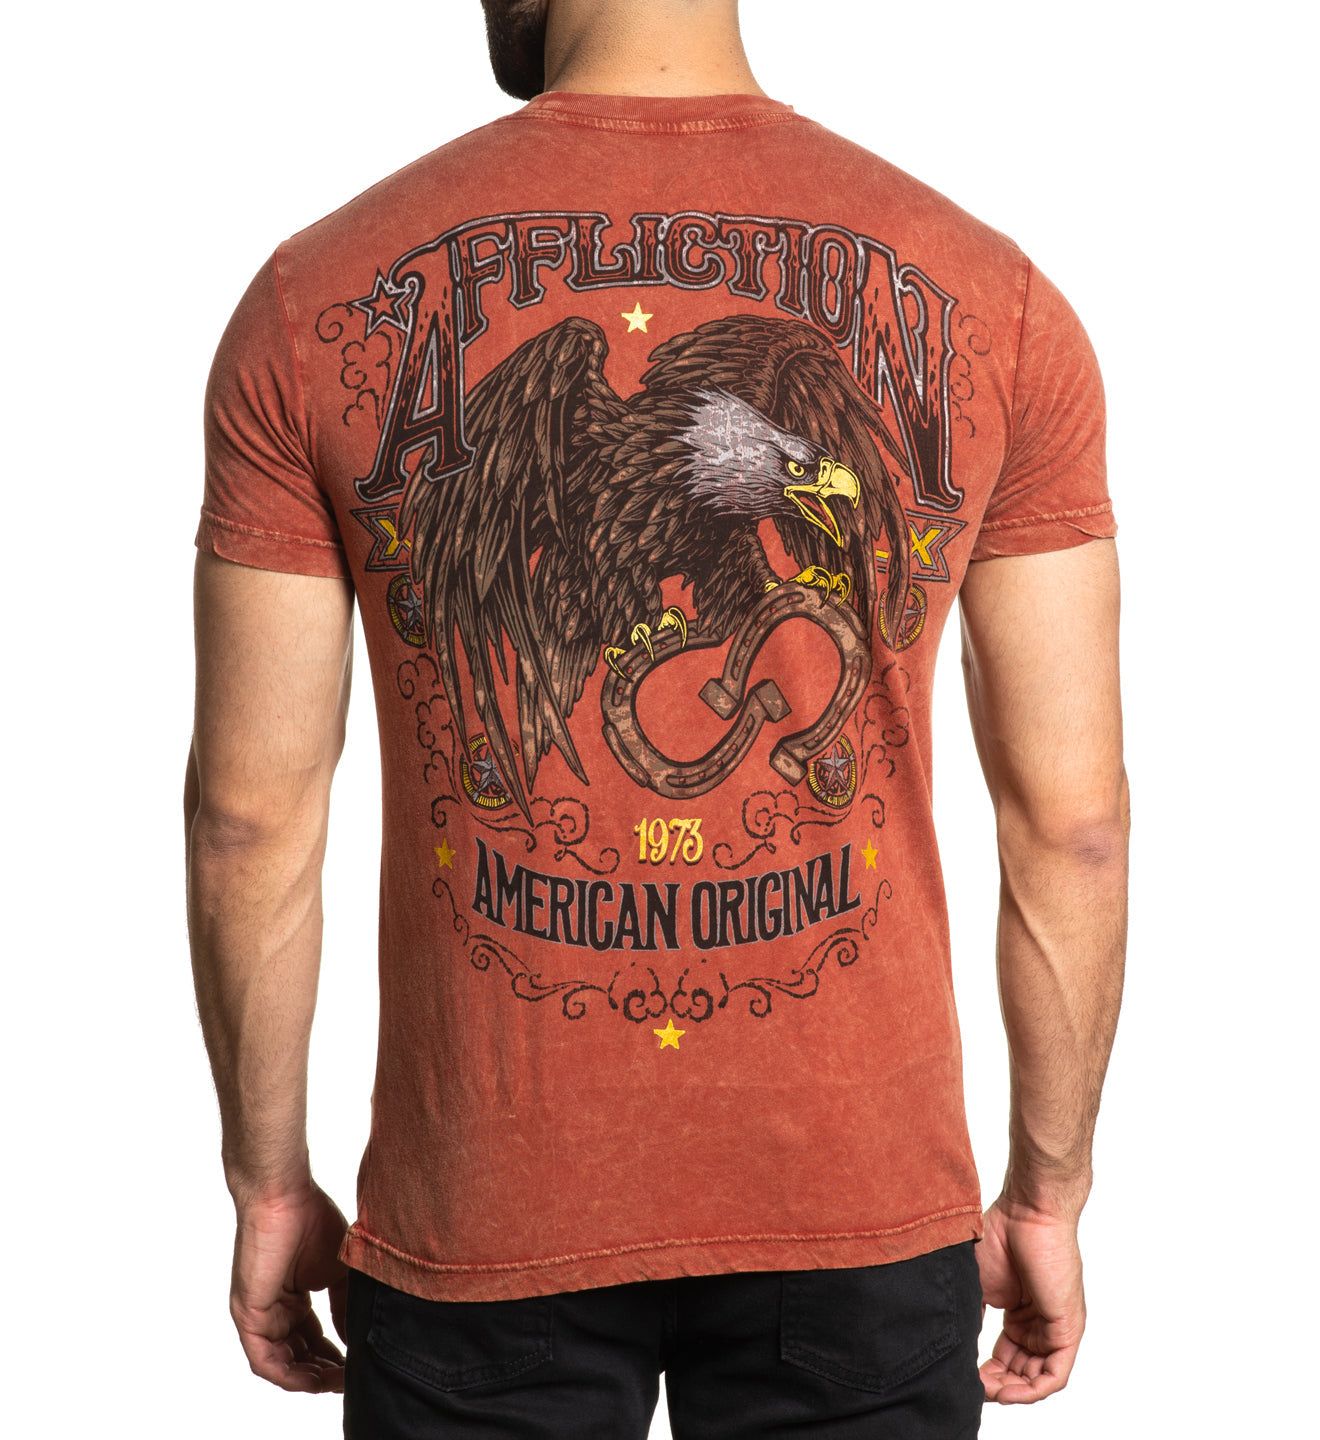 American Original - Affliction Clothing